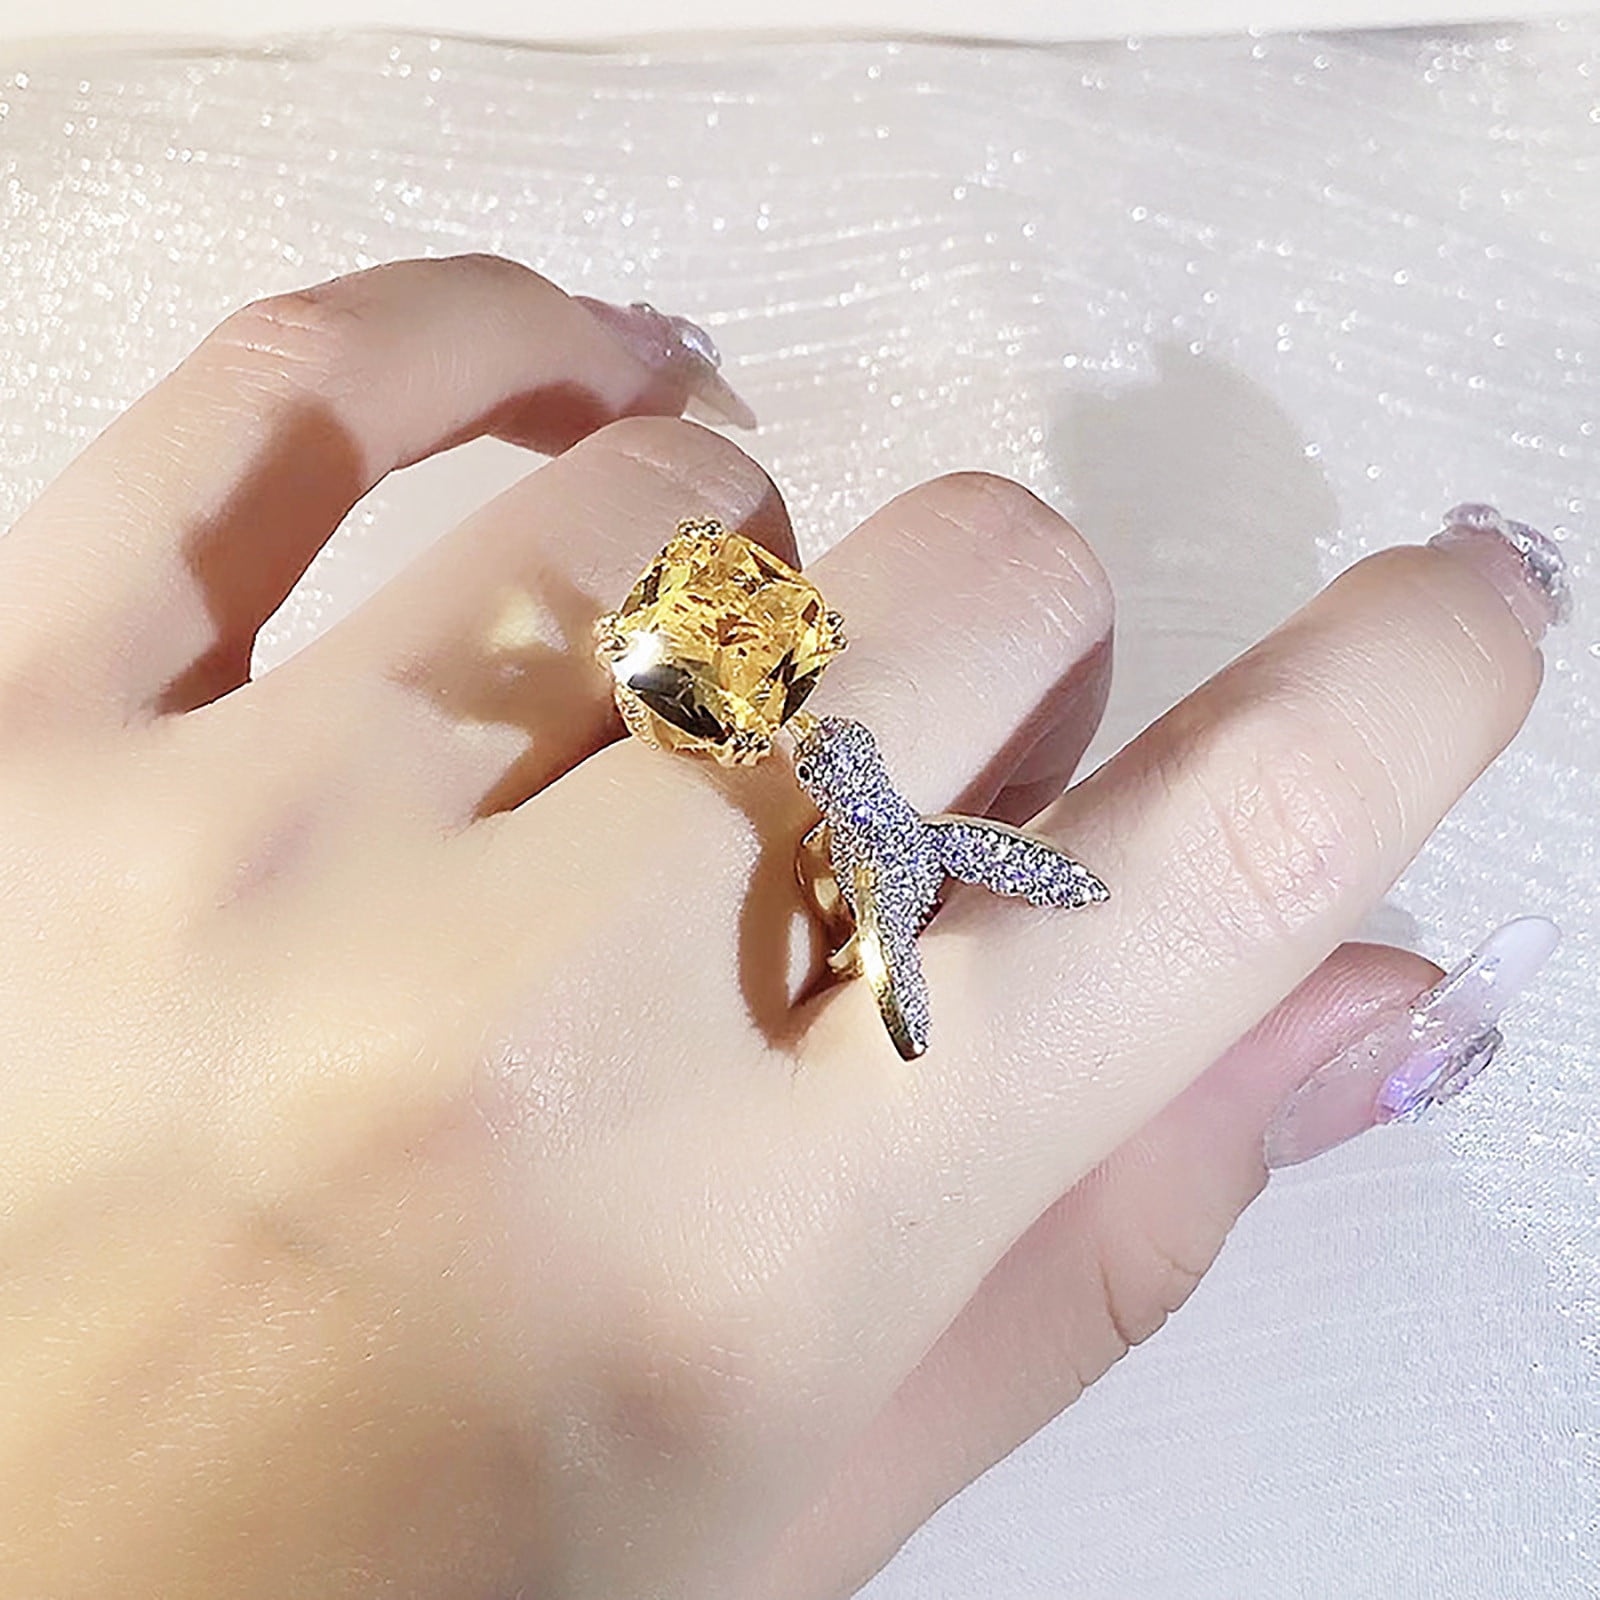 Hummingbird Luck Ring